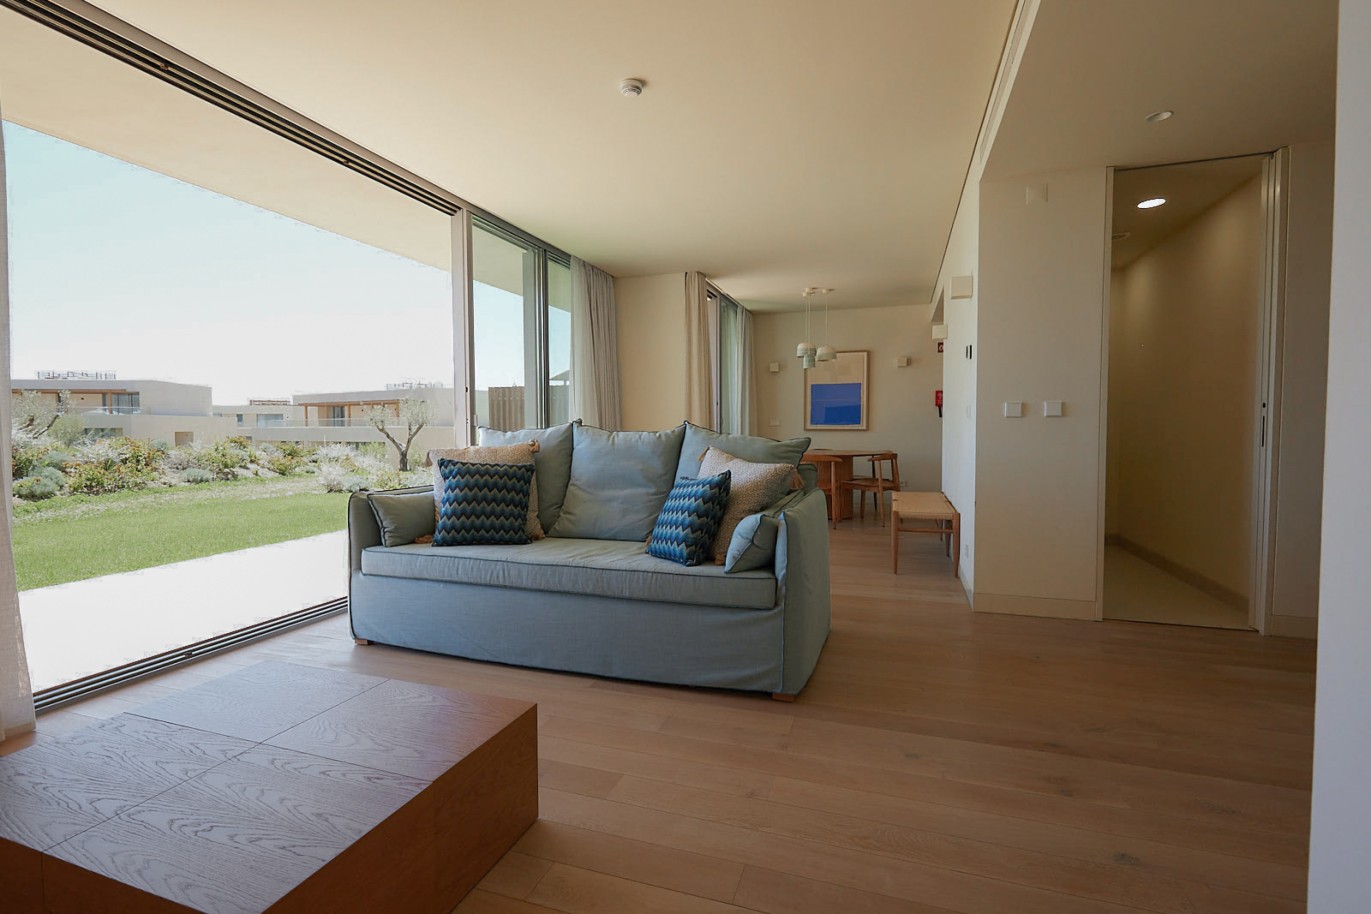 2 bedroom apartment in resort, for sale in Porches, Algarve_229093